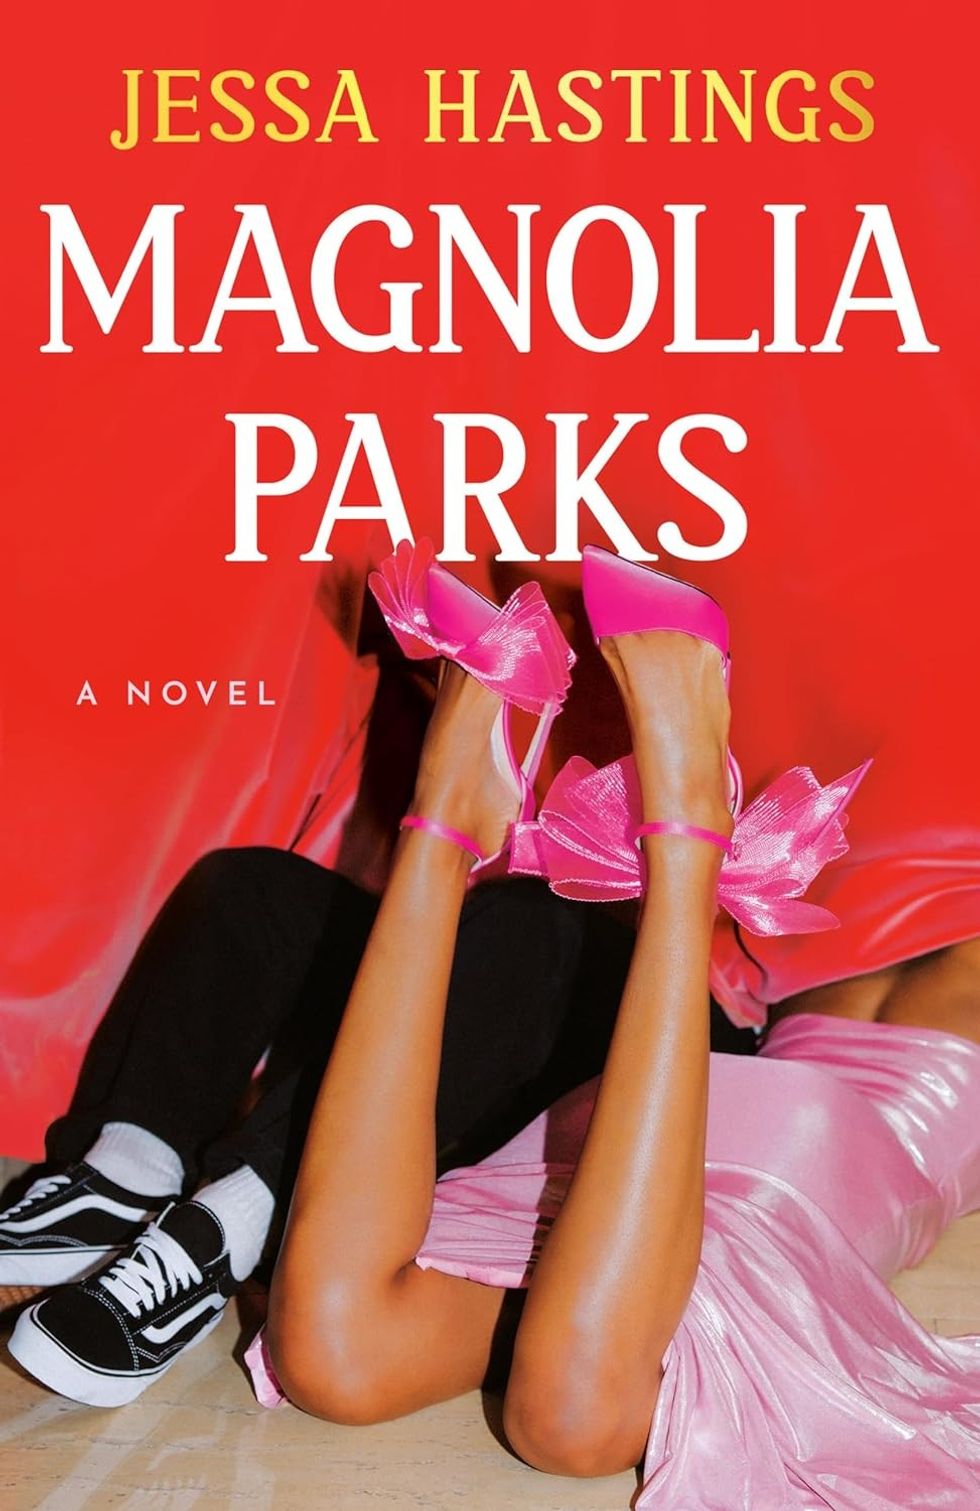 Magnolia Parks Series by Jesse Hastings